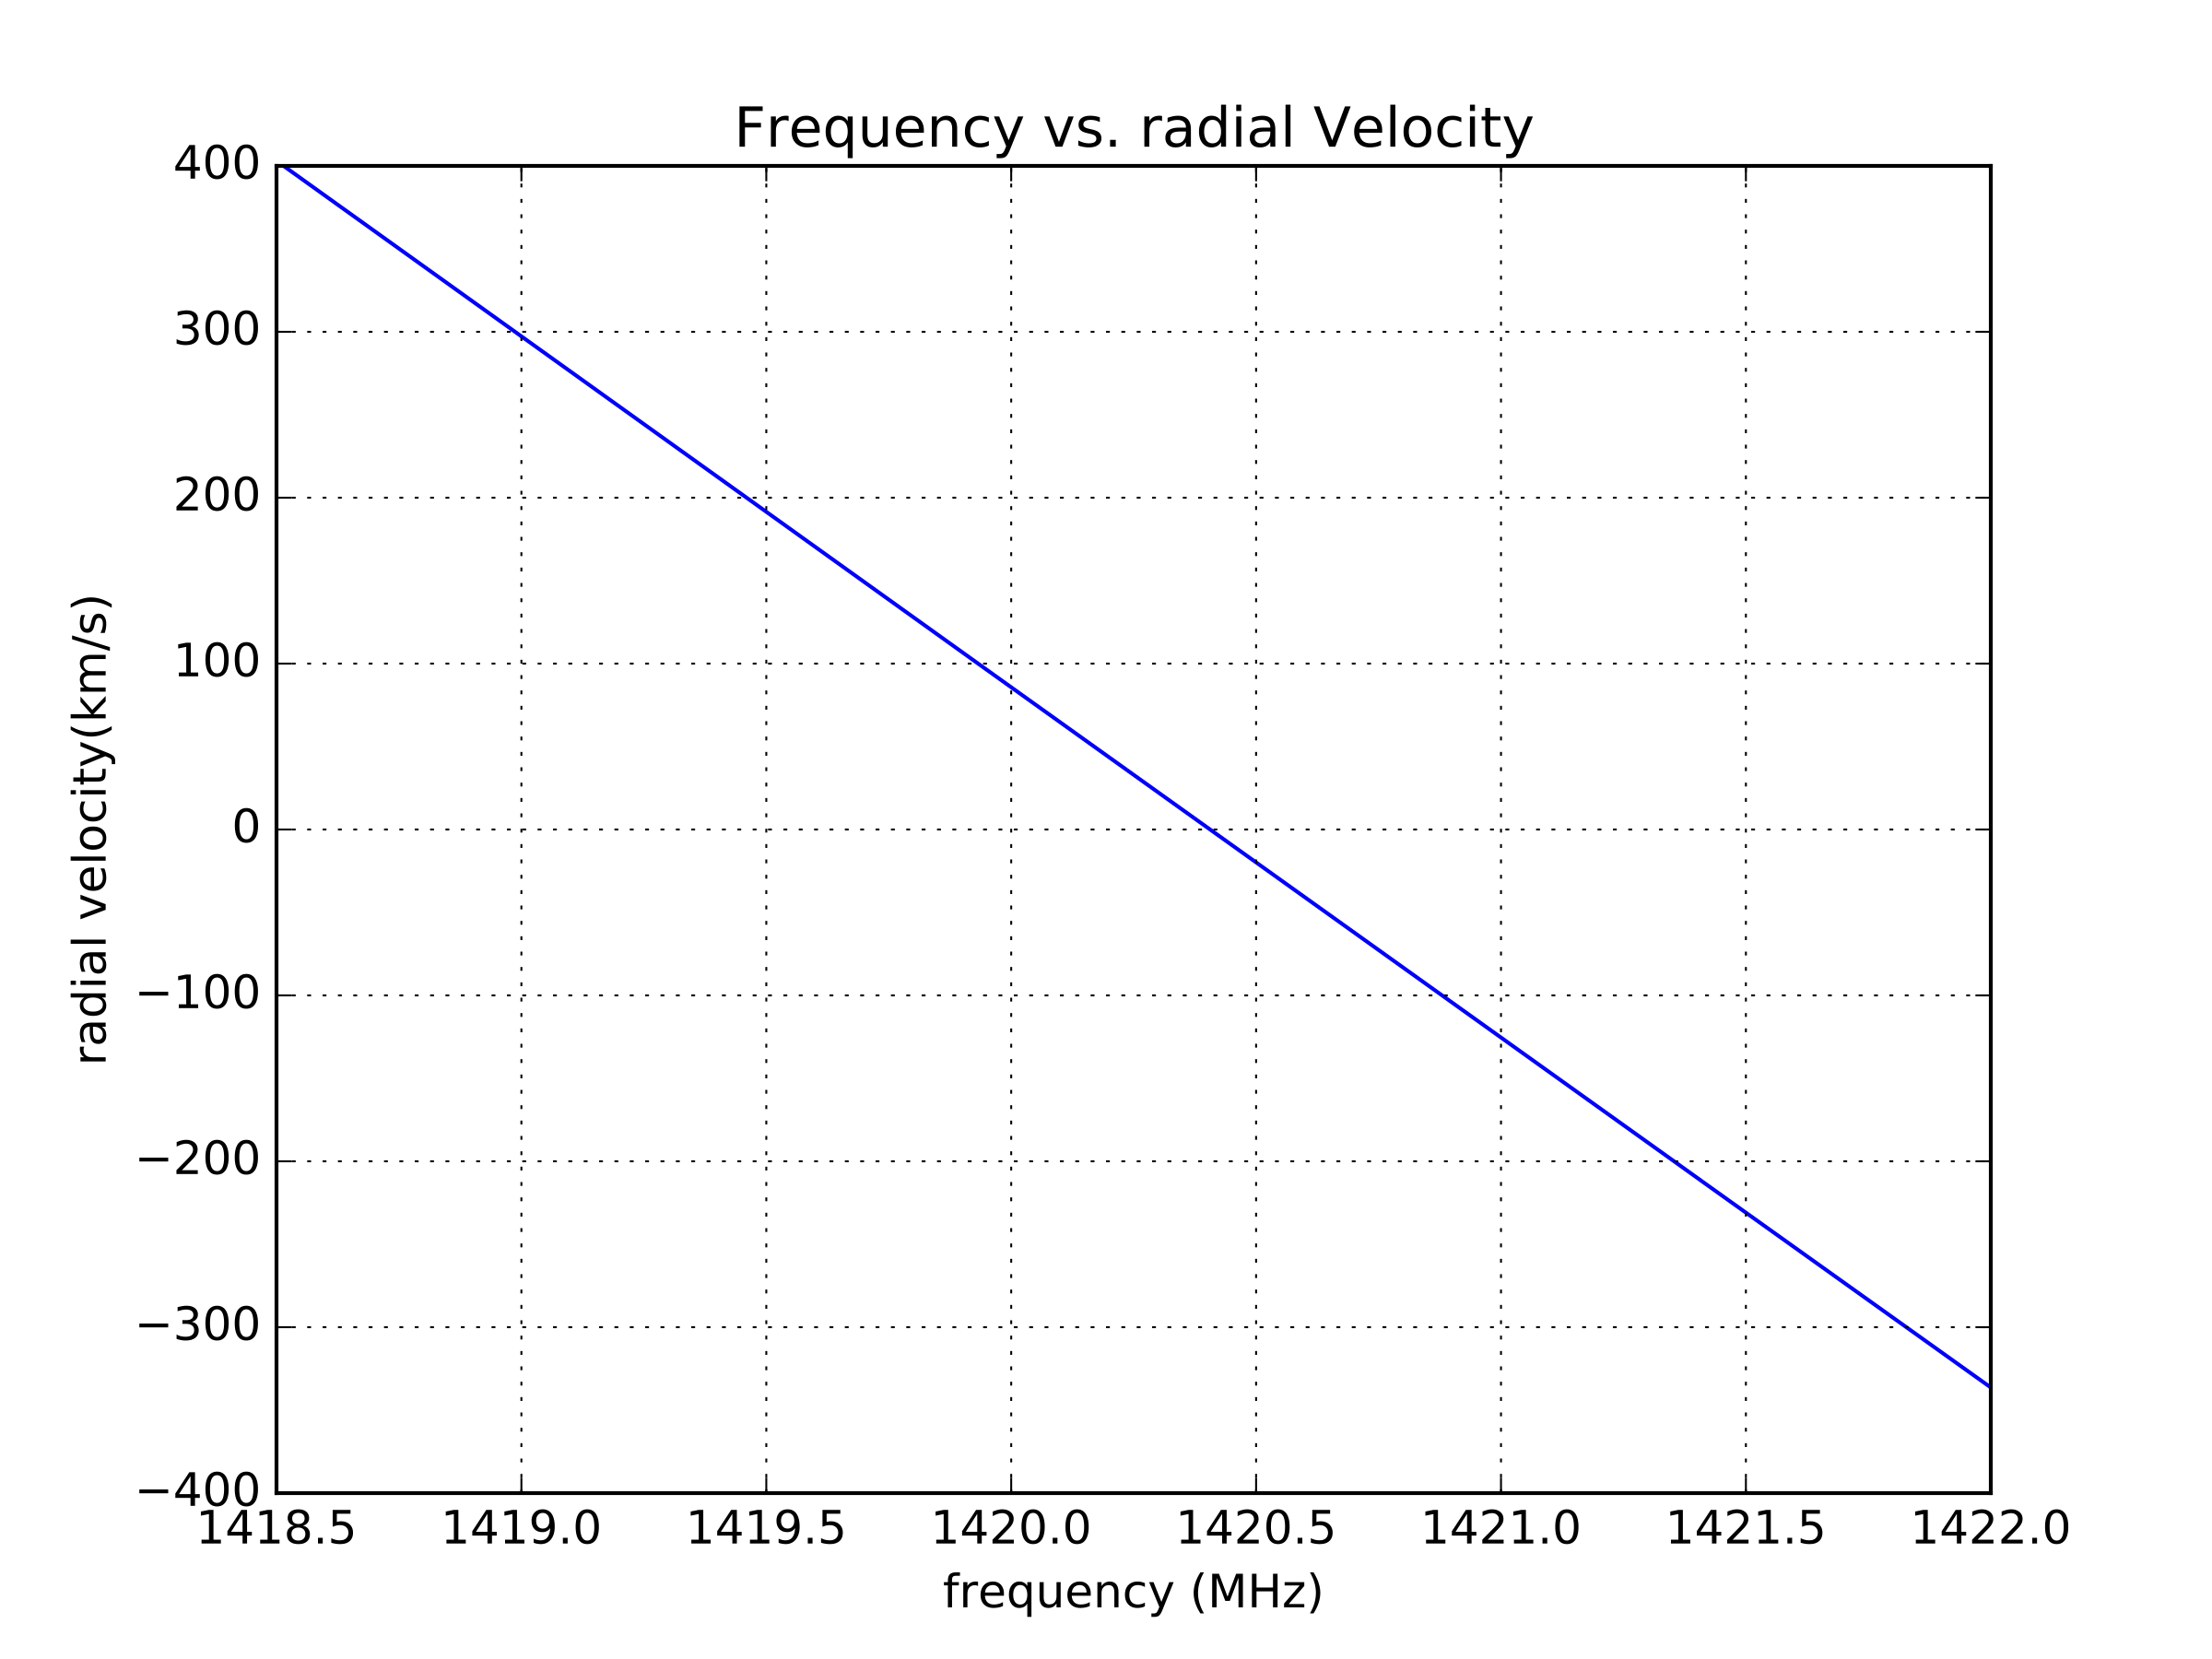 freq_vs_radial_velocity